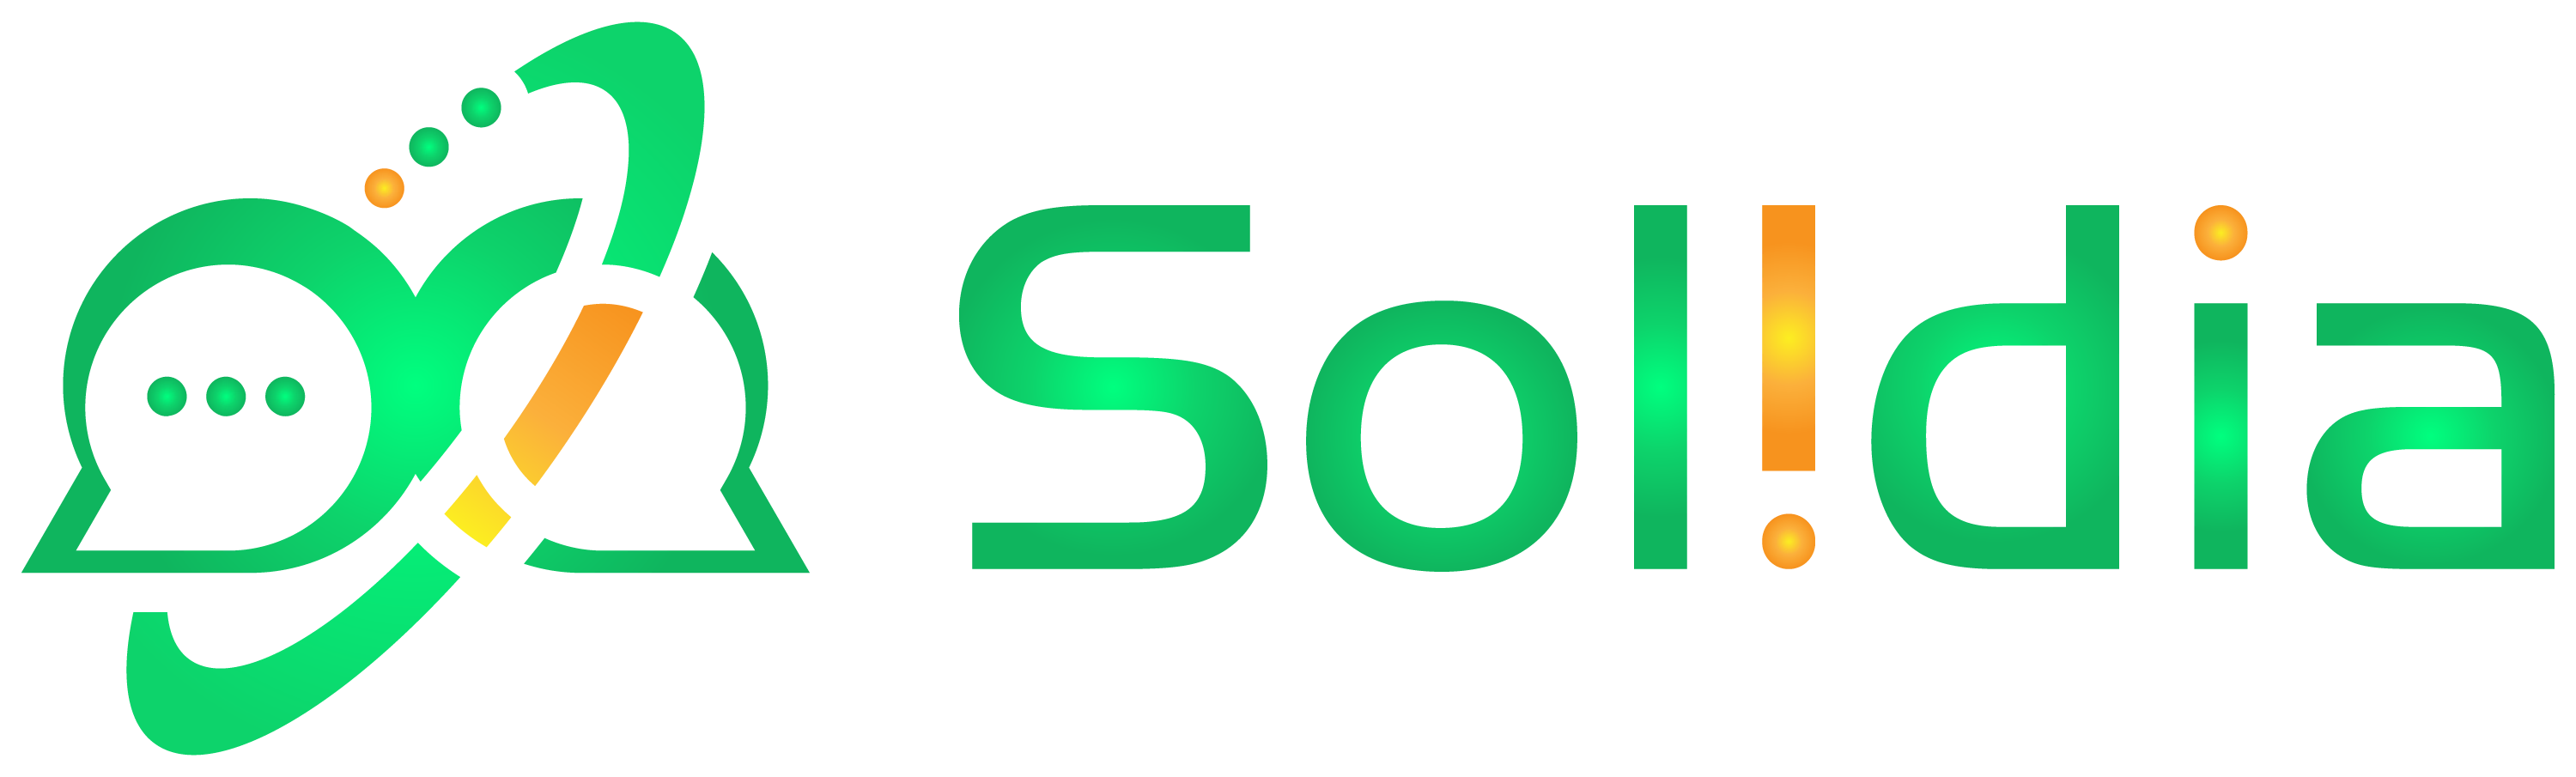 Solidia logo yoko